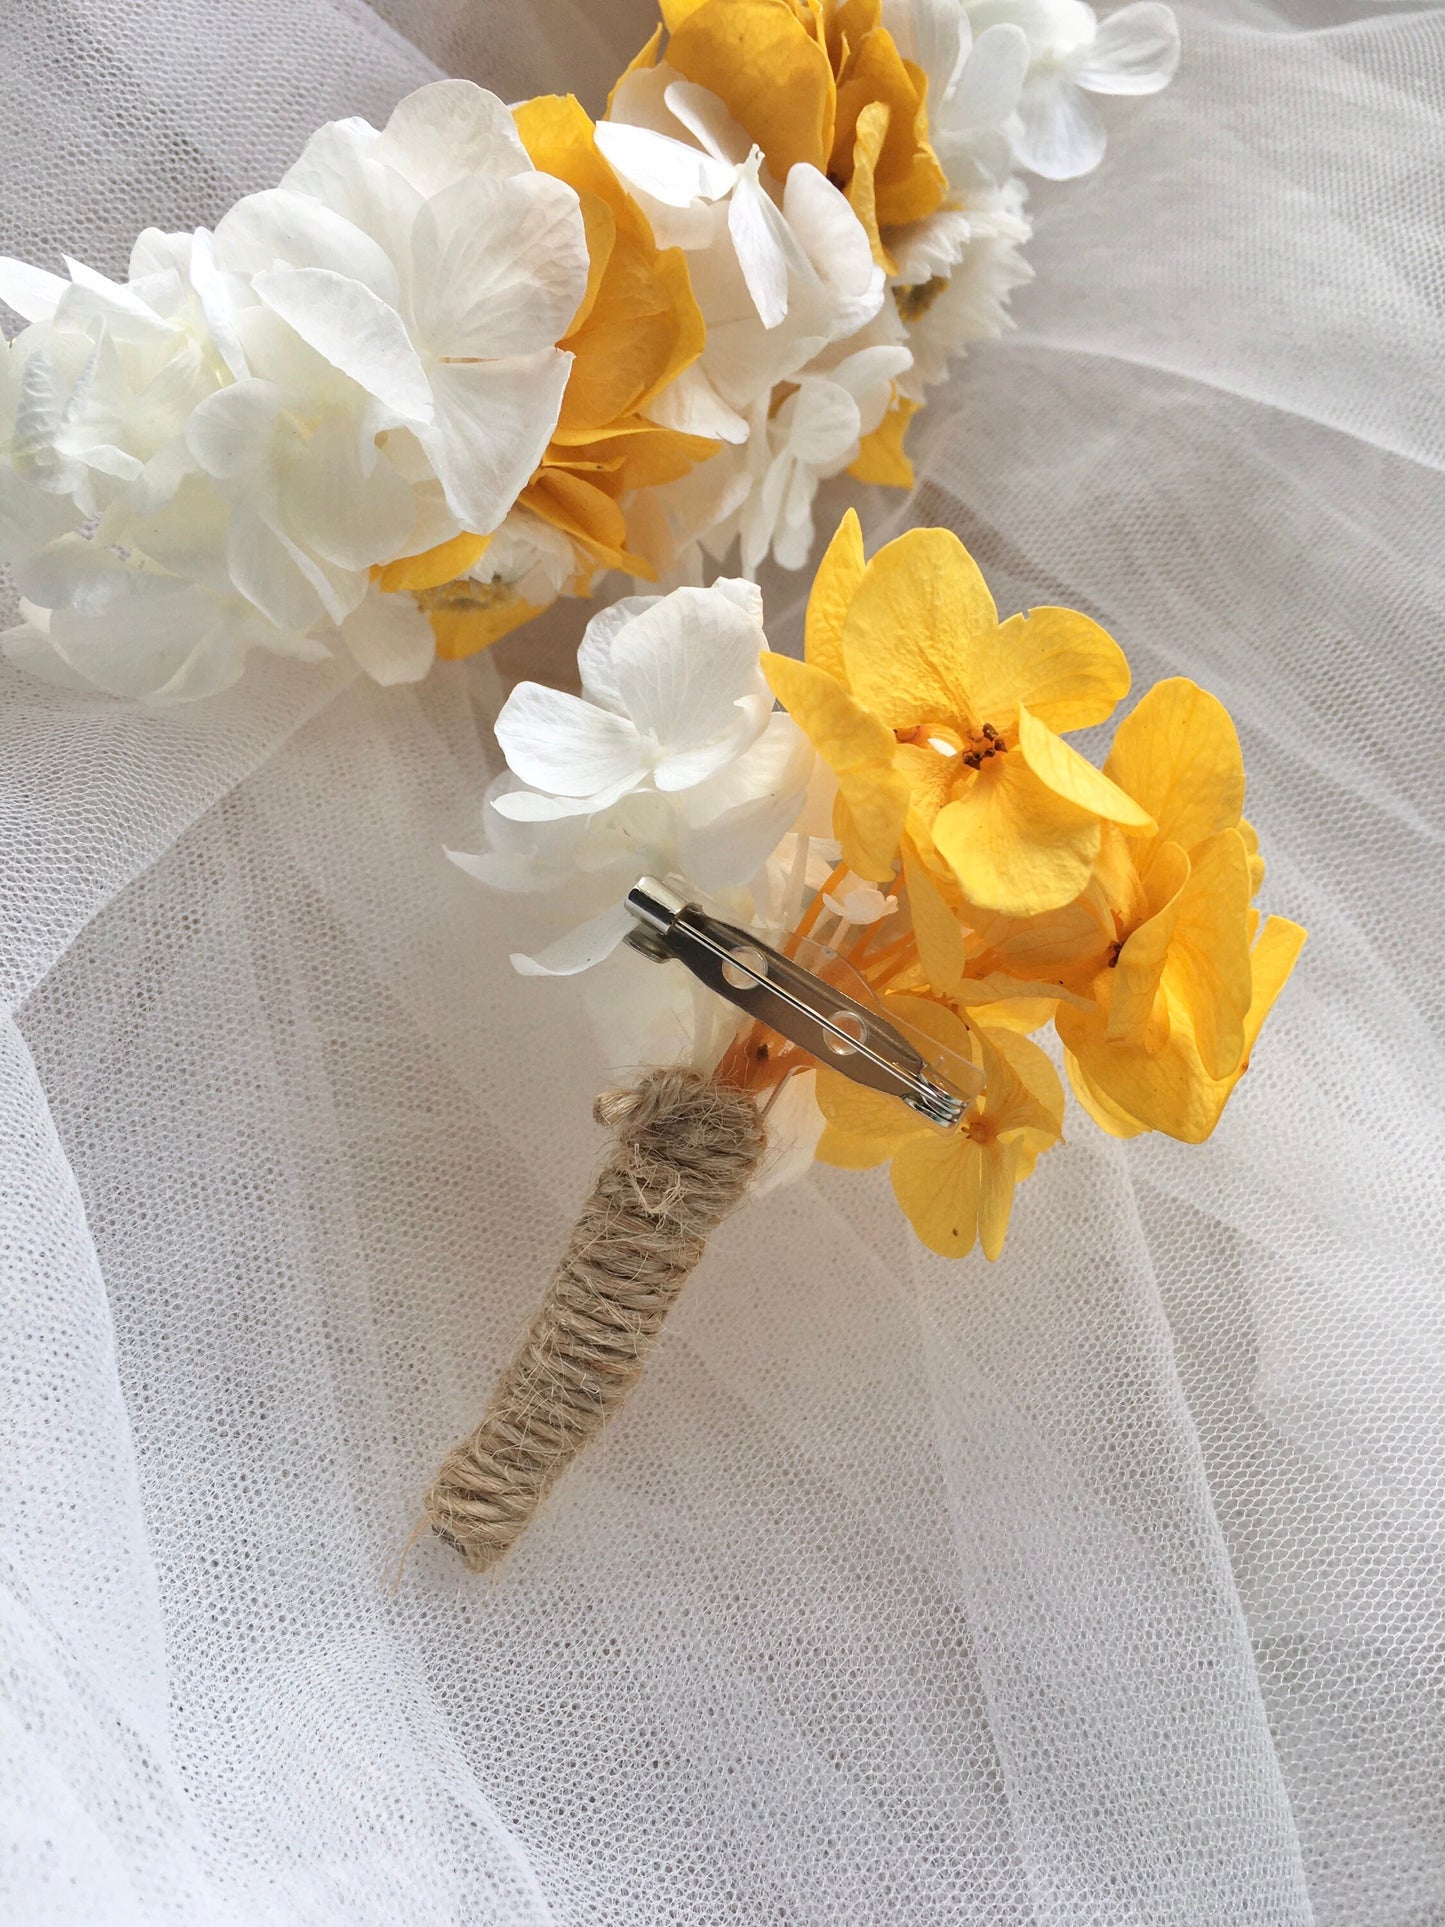 Yellow and White Bridal Flower Headband, Maternity Photo Shoot Flower Tiara, UK, Real Flower Wedding Accessories Set Unique